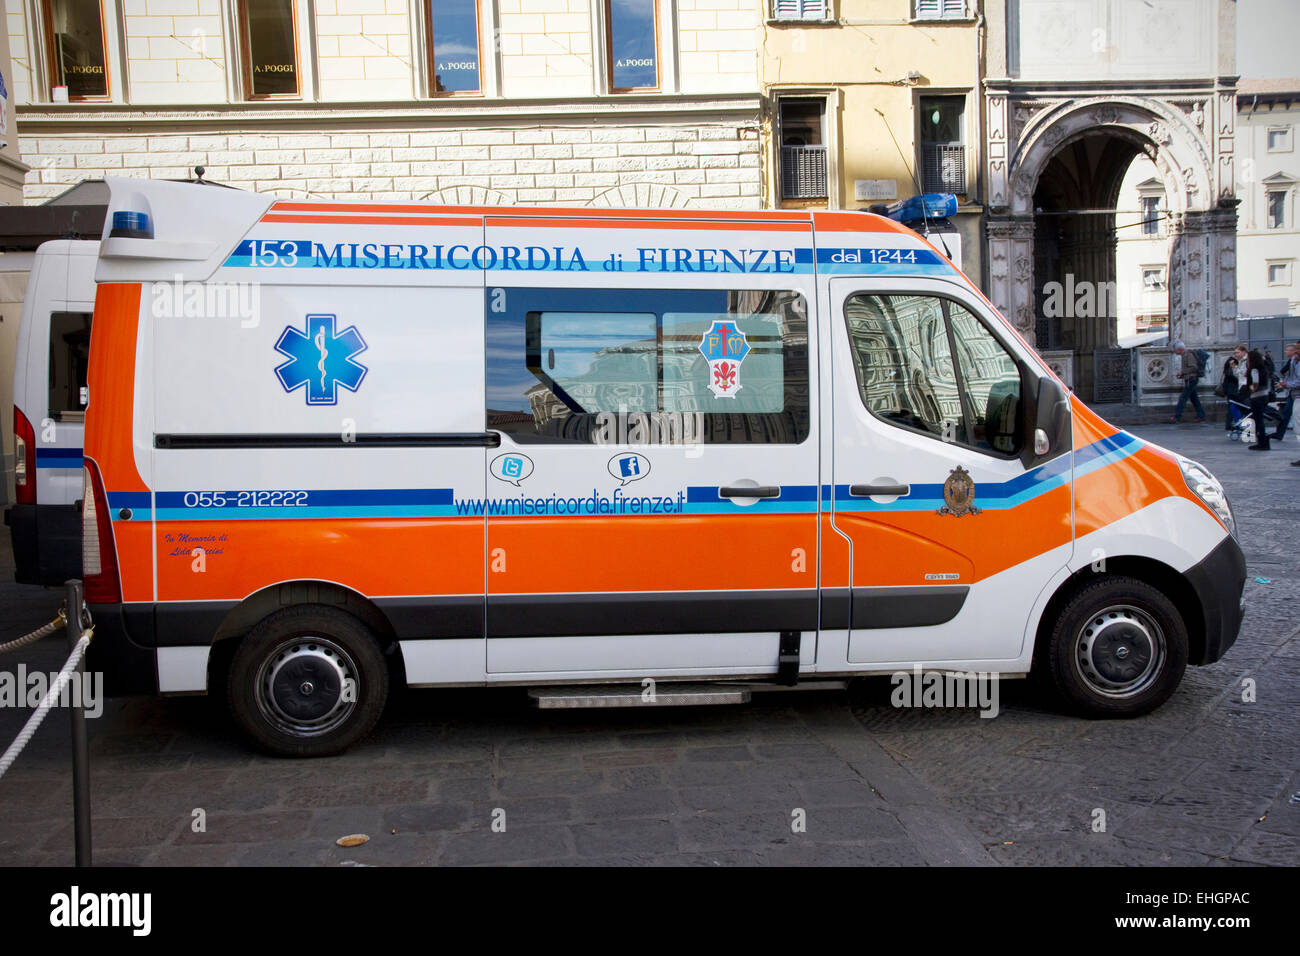 Misericordia di Firenze ambulance, Piazza del Duomo, city centre, Florence, Tuscany, Italy. Stock Photo